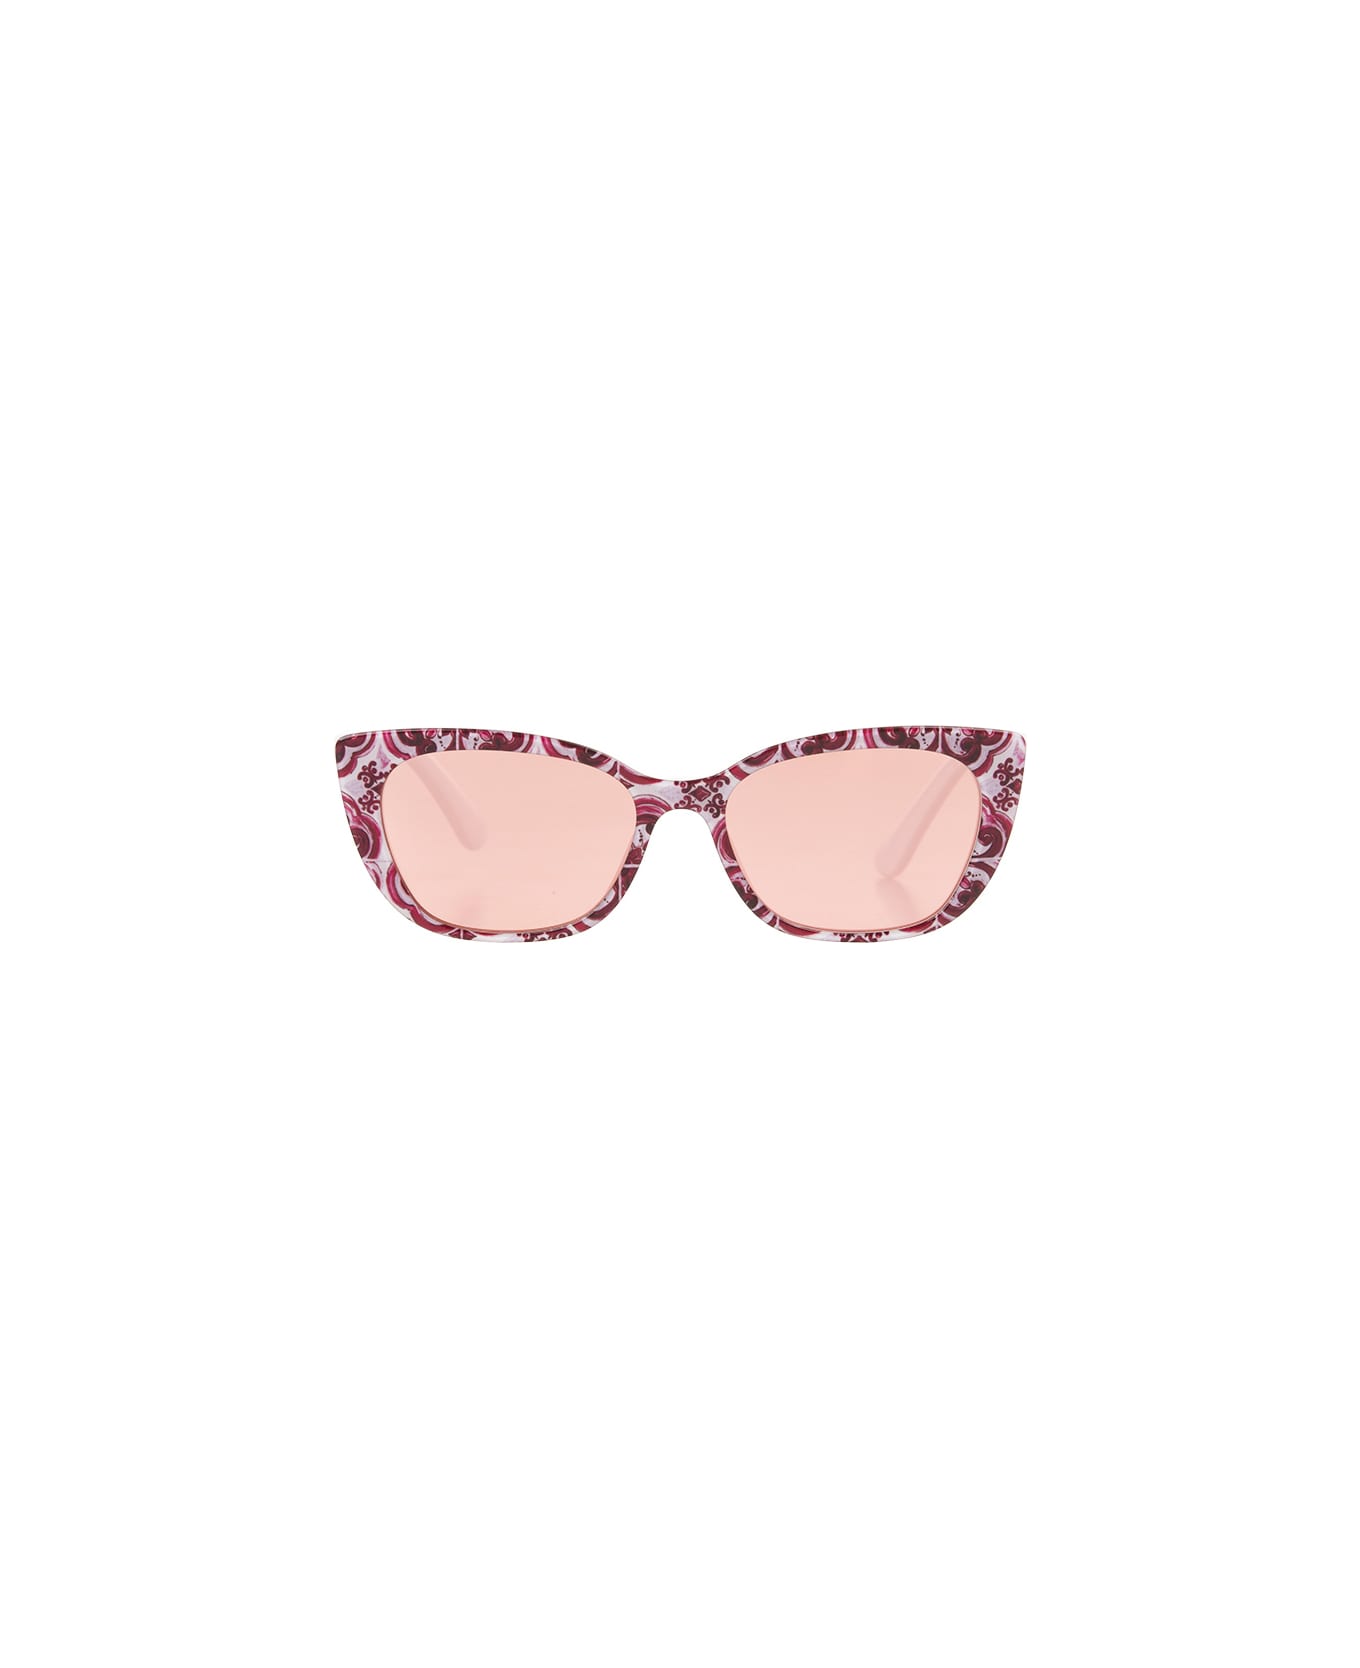 Dolce & Gabbana Sunglasses With Pink Majolica Print - Pink